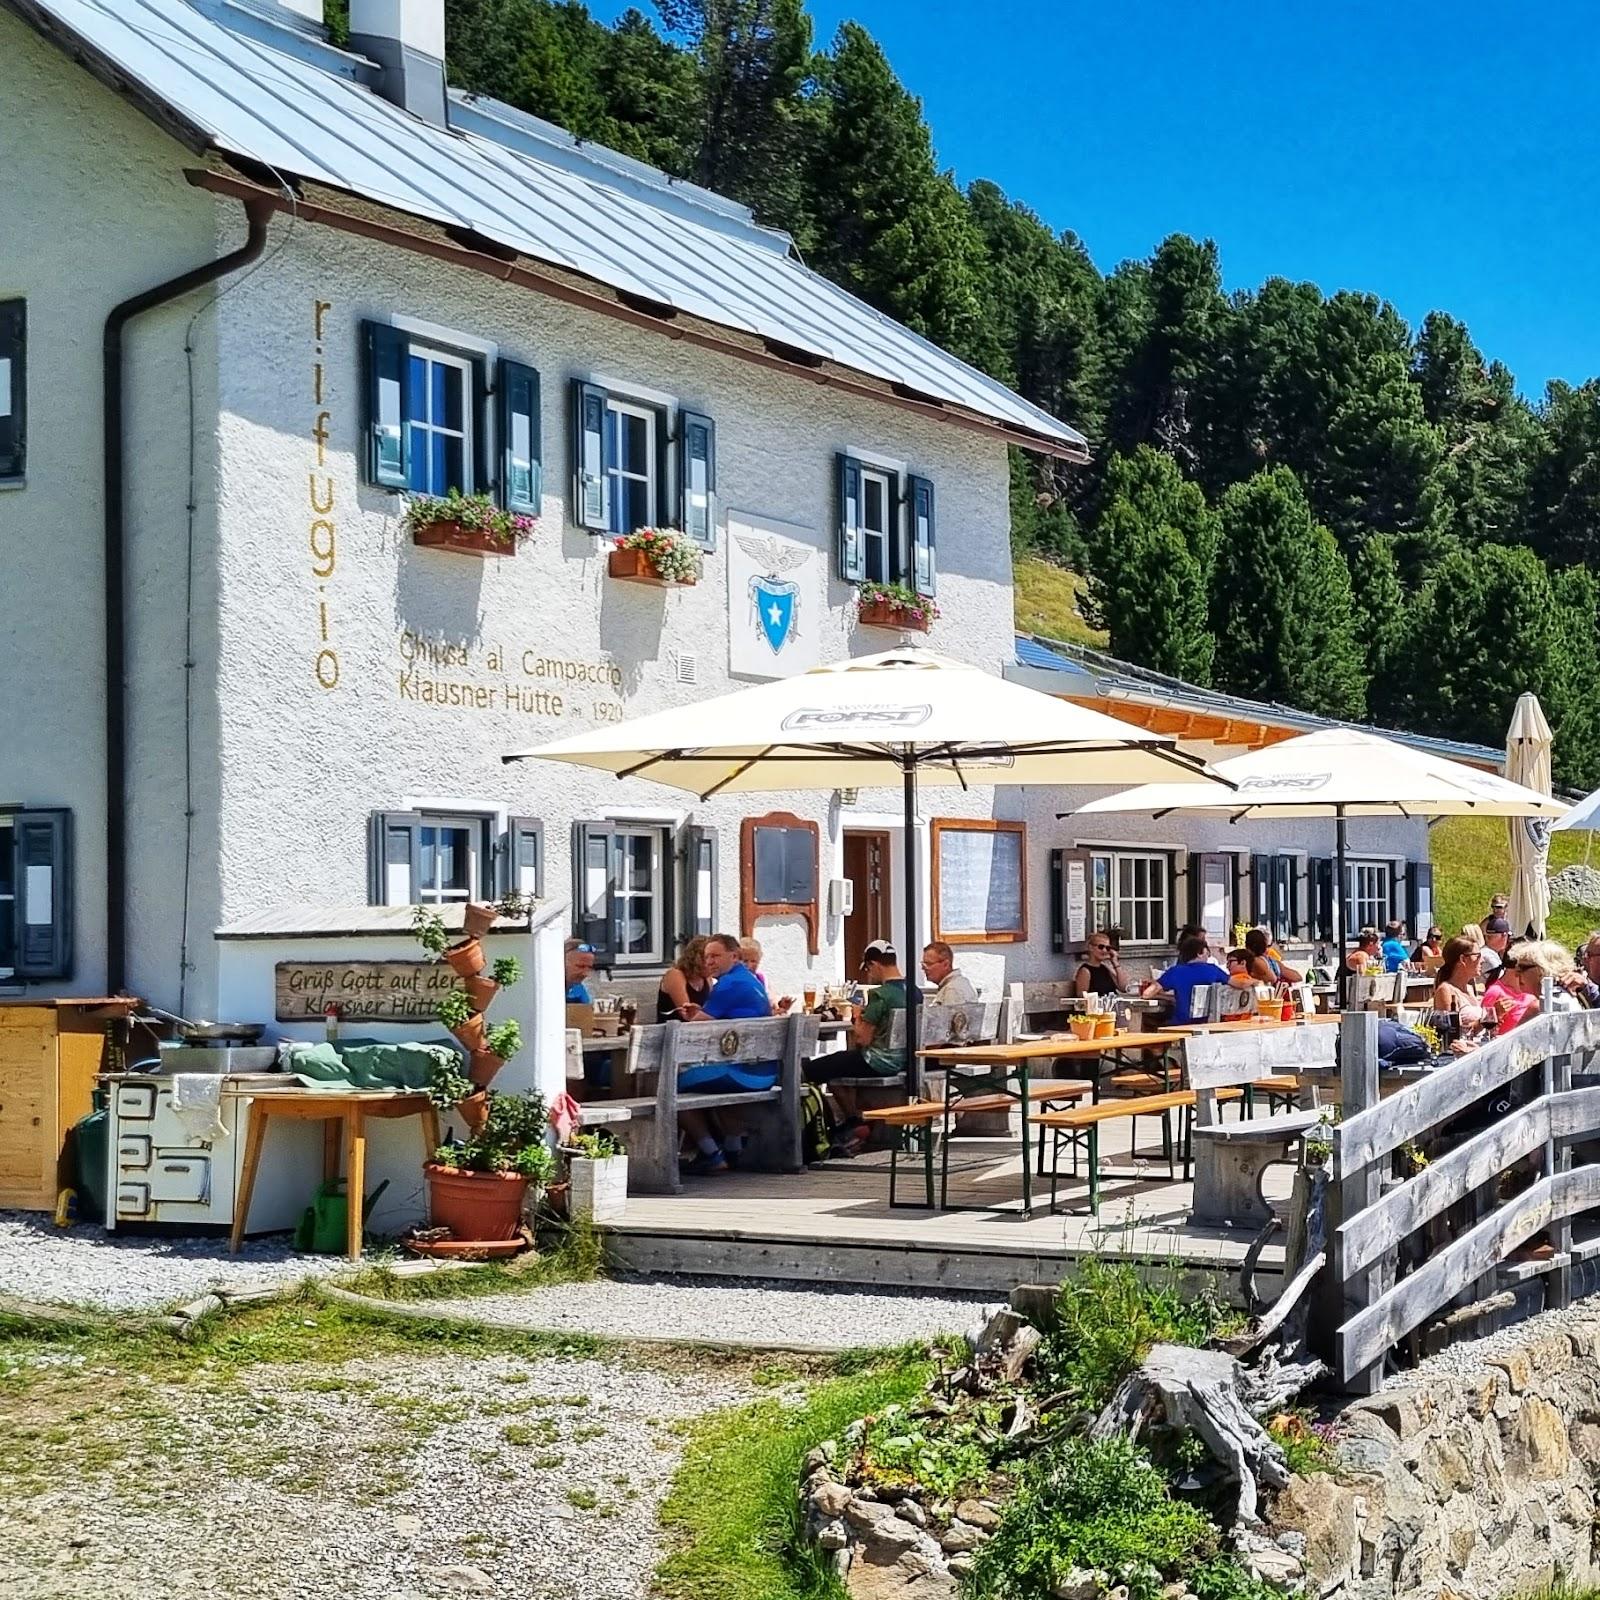 Restaurant "Klausner Hütte" in Klausen